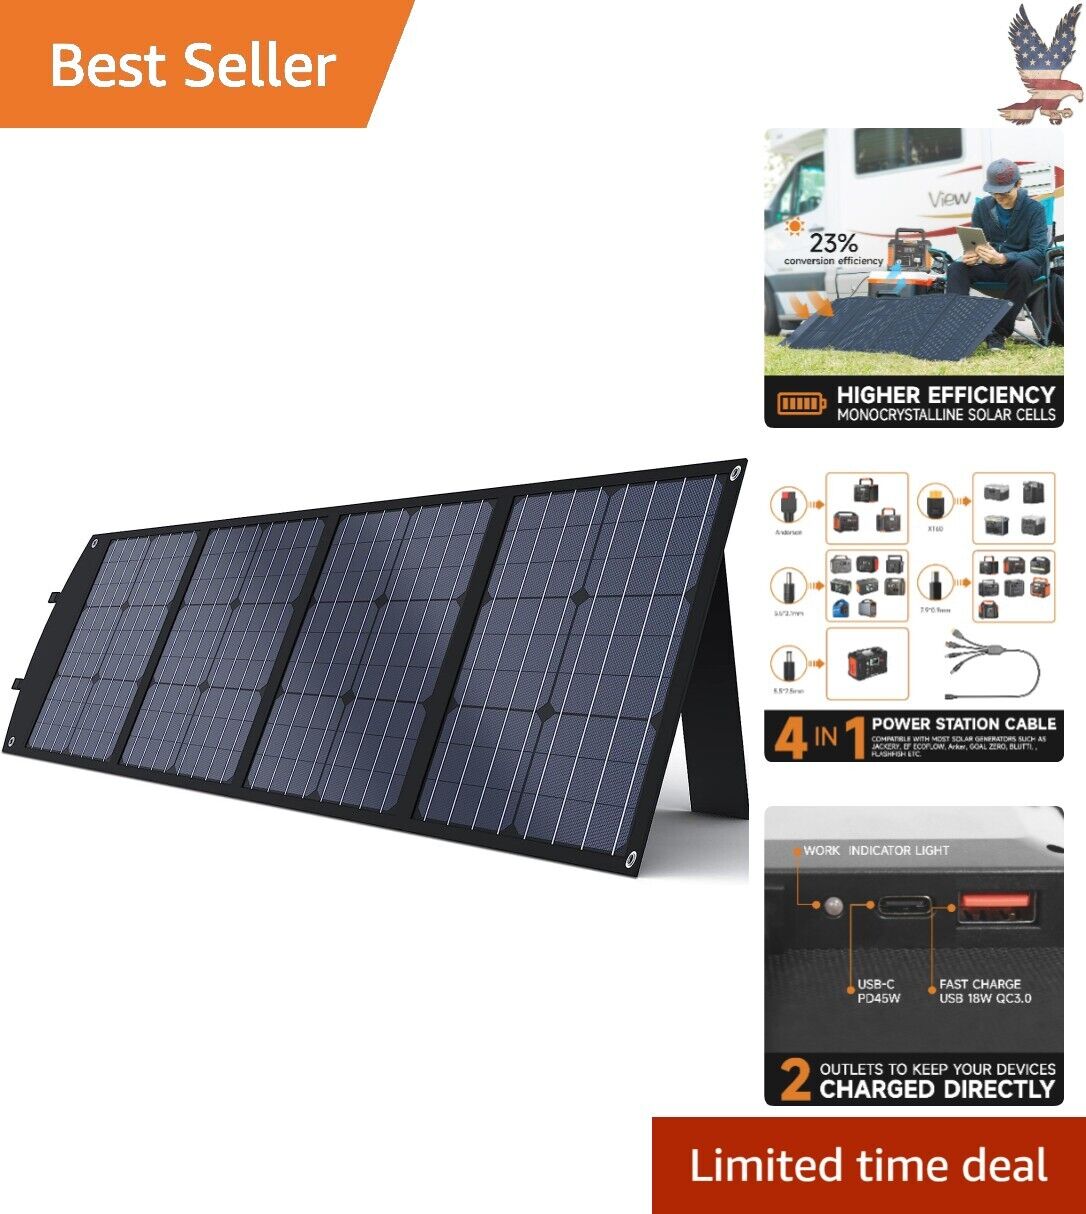 Rugged Portable Solar Panel - 120W Output - Universal USB Ports